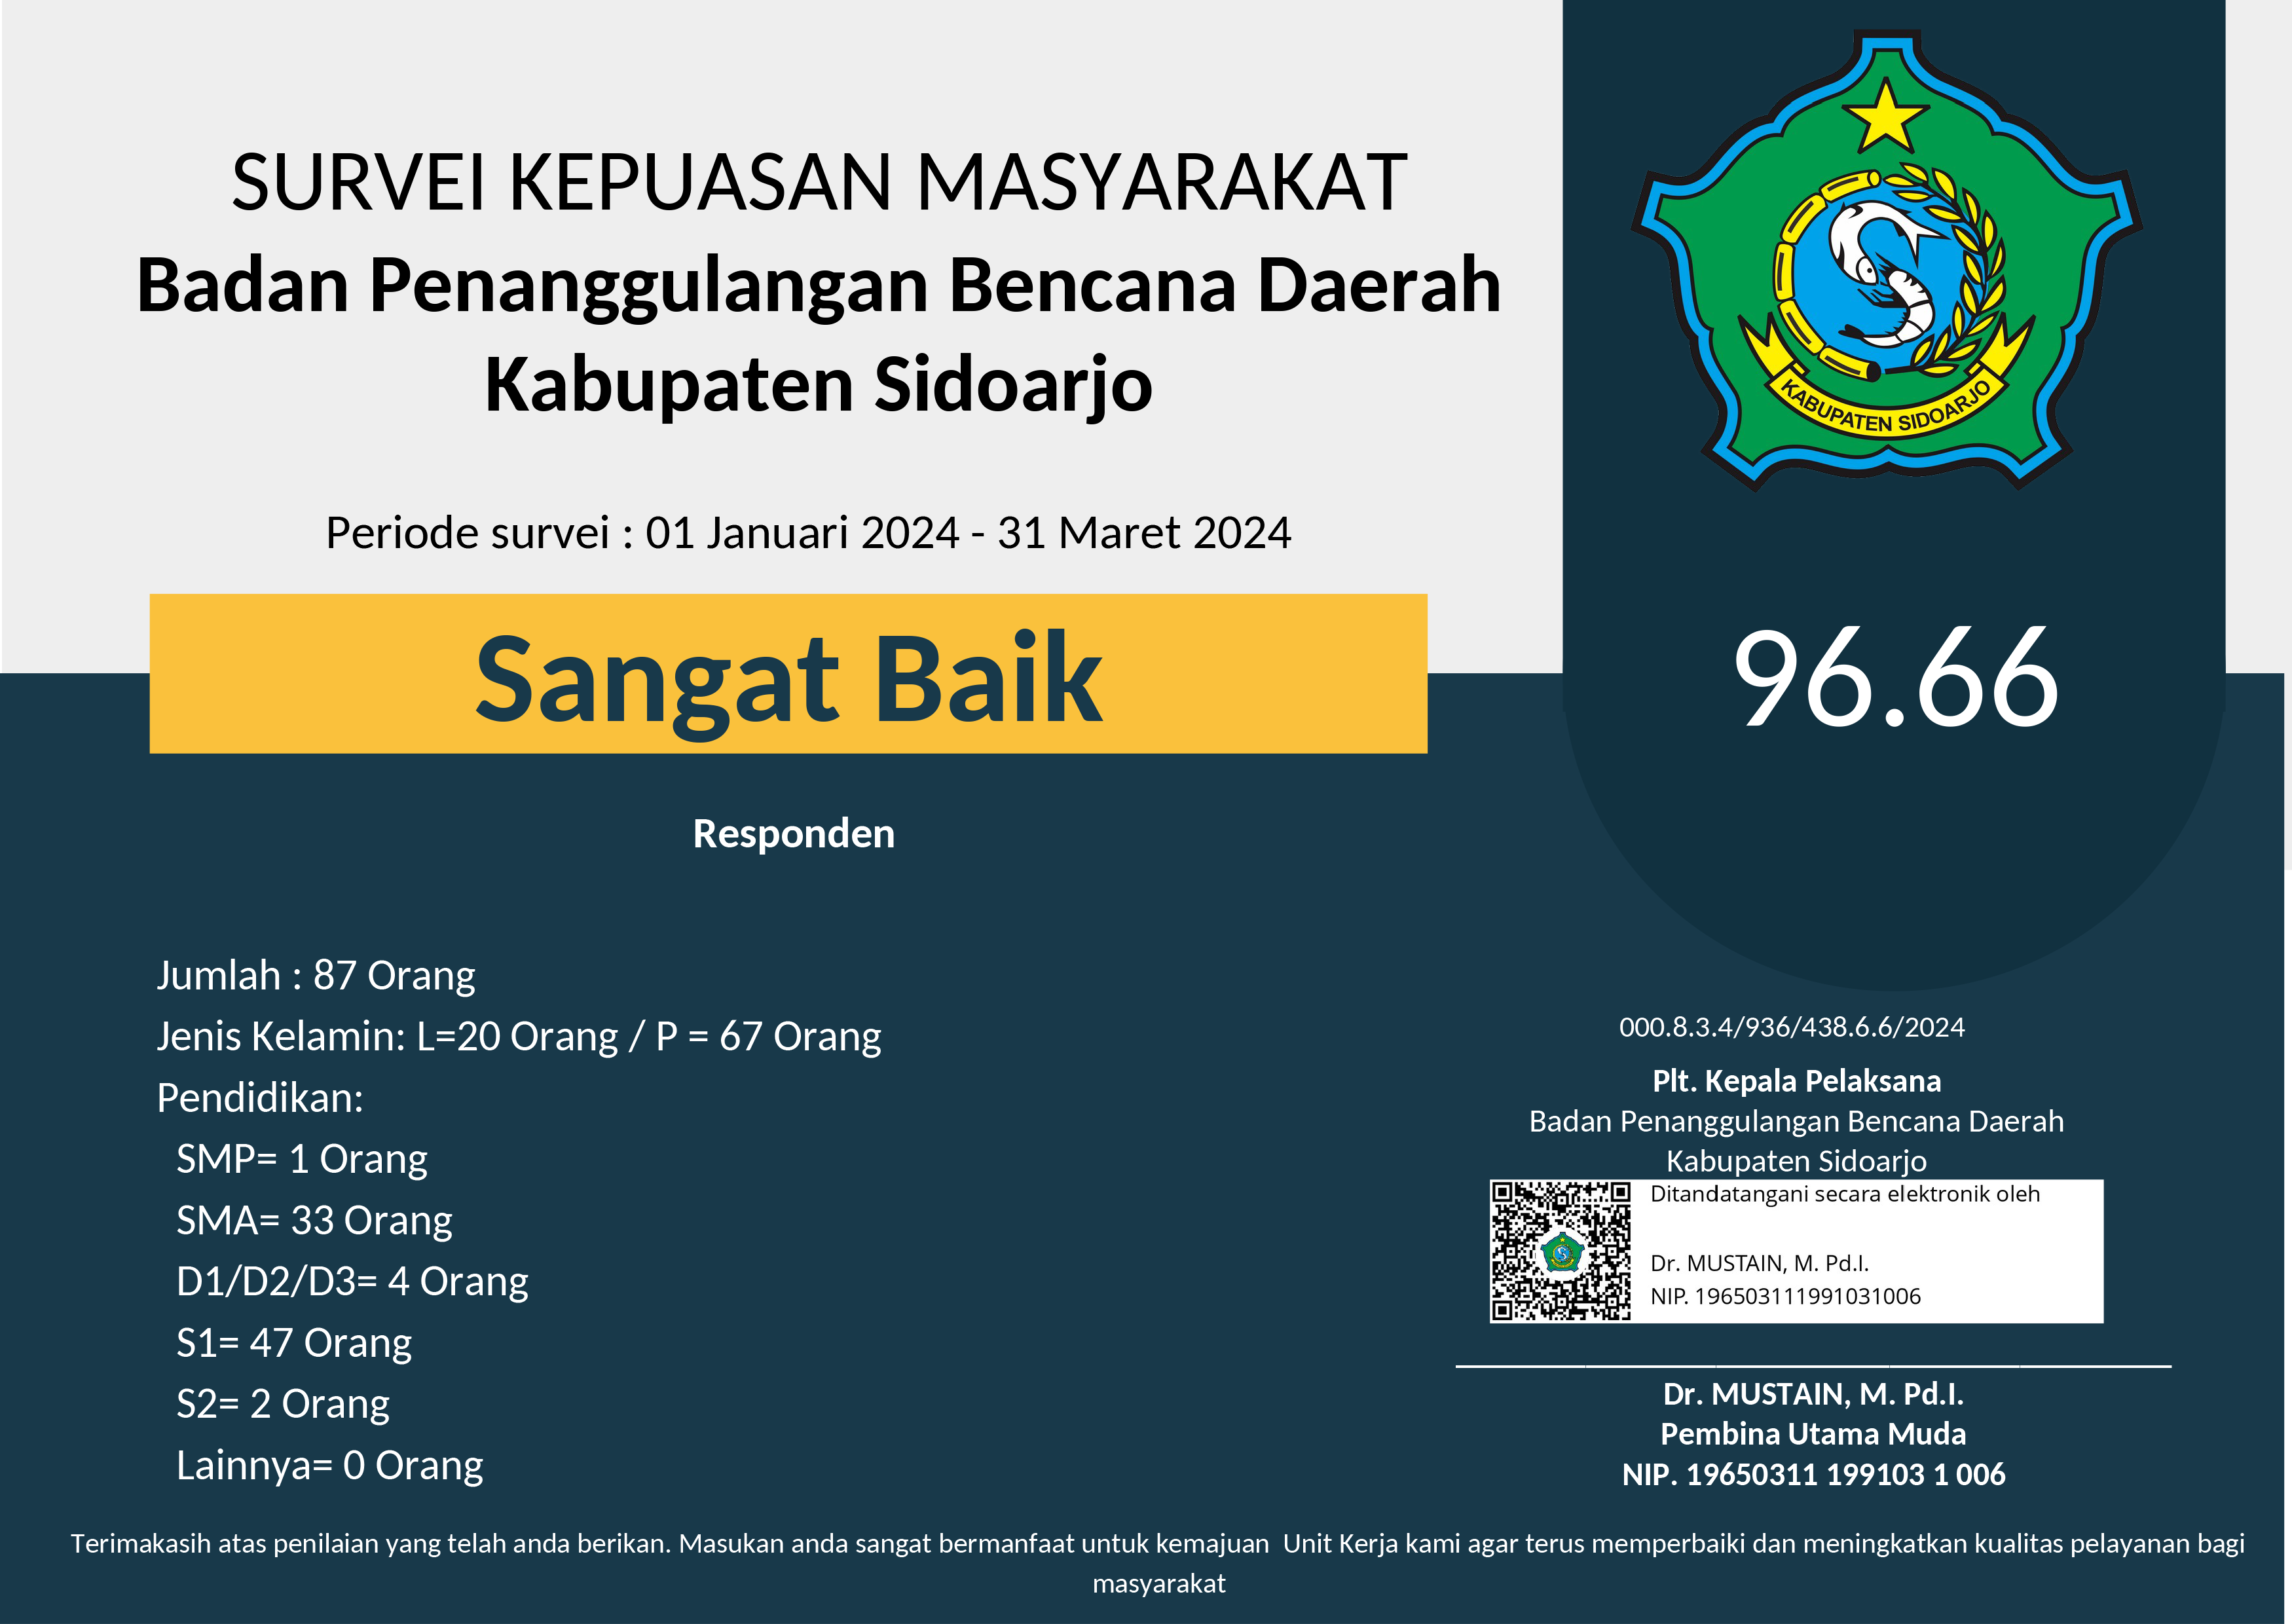 BPBD SIDOARJO - Badan Penanggulangan Bencana Daerah Kabupaten Sidoarjo Indeks Pelayanan Publik Tahun 2024